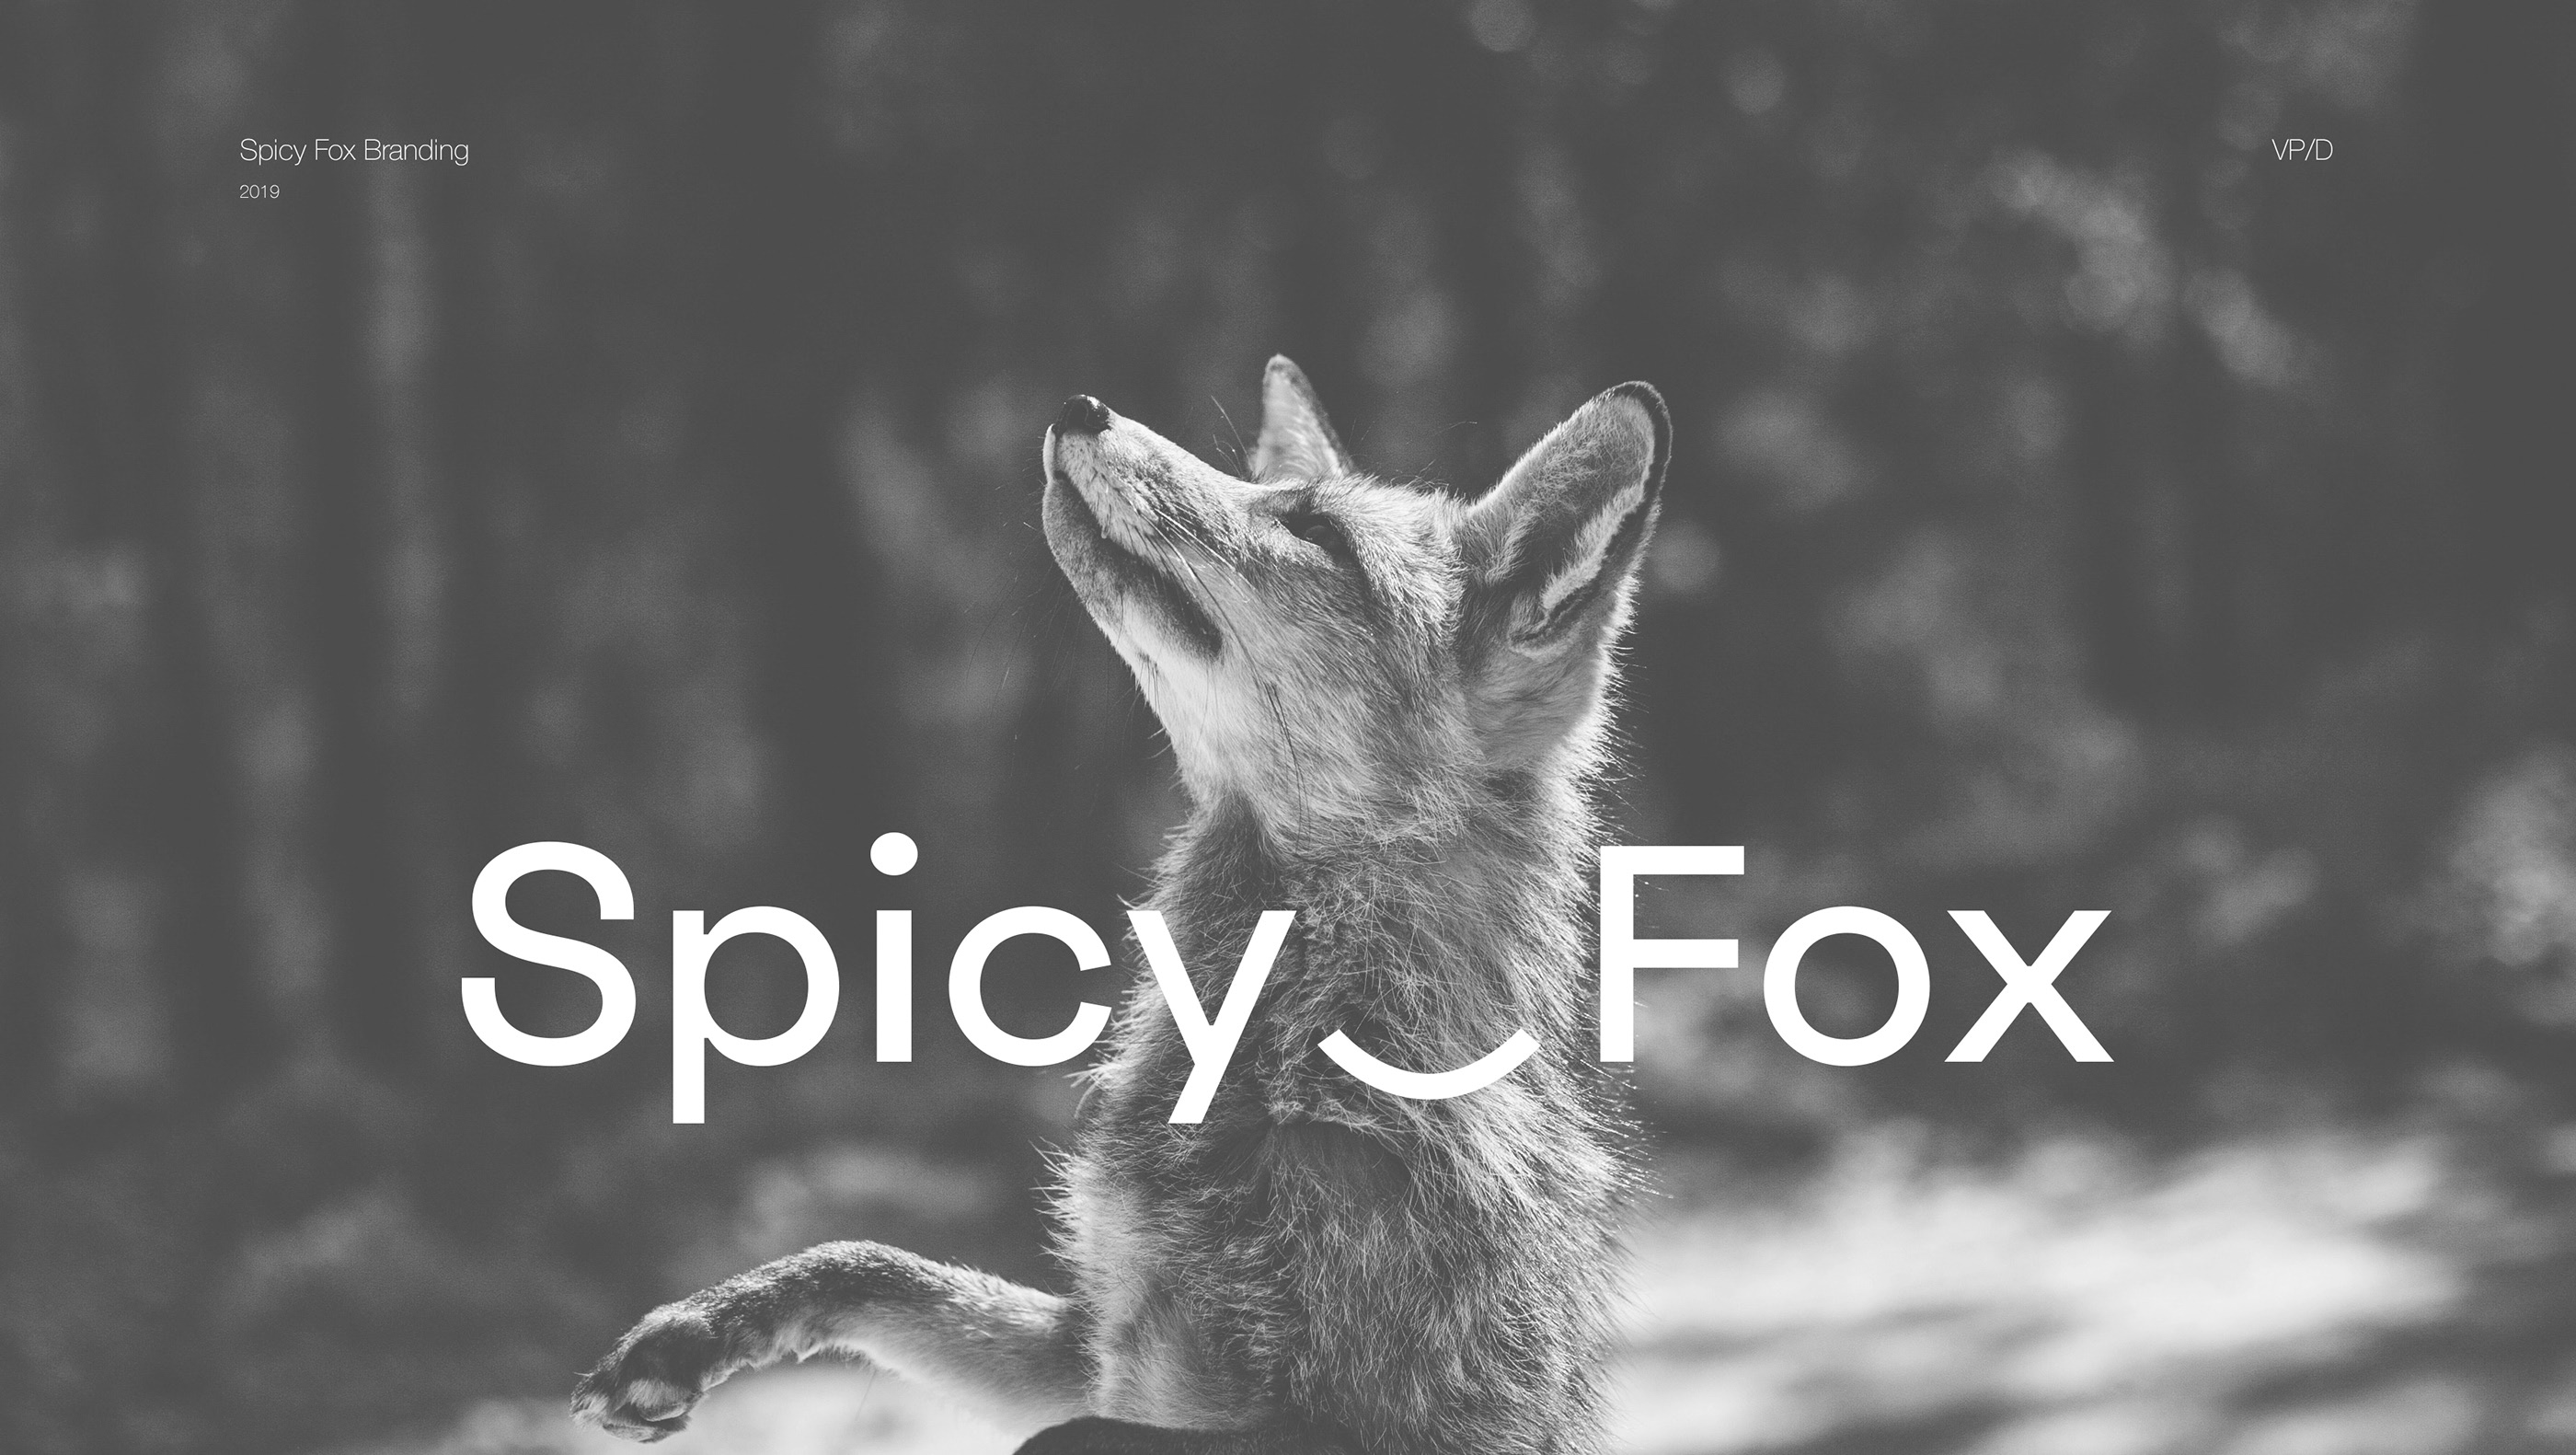 Spice fox